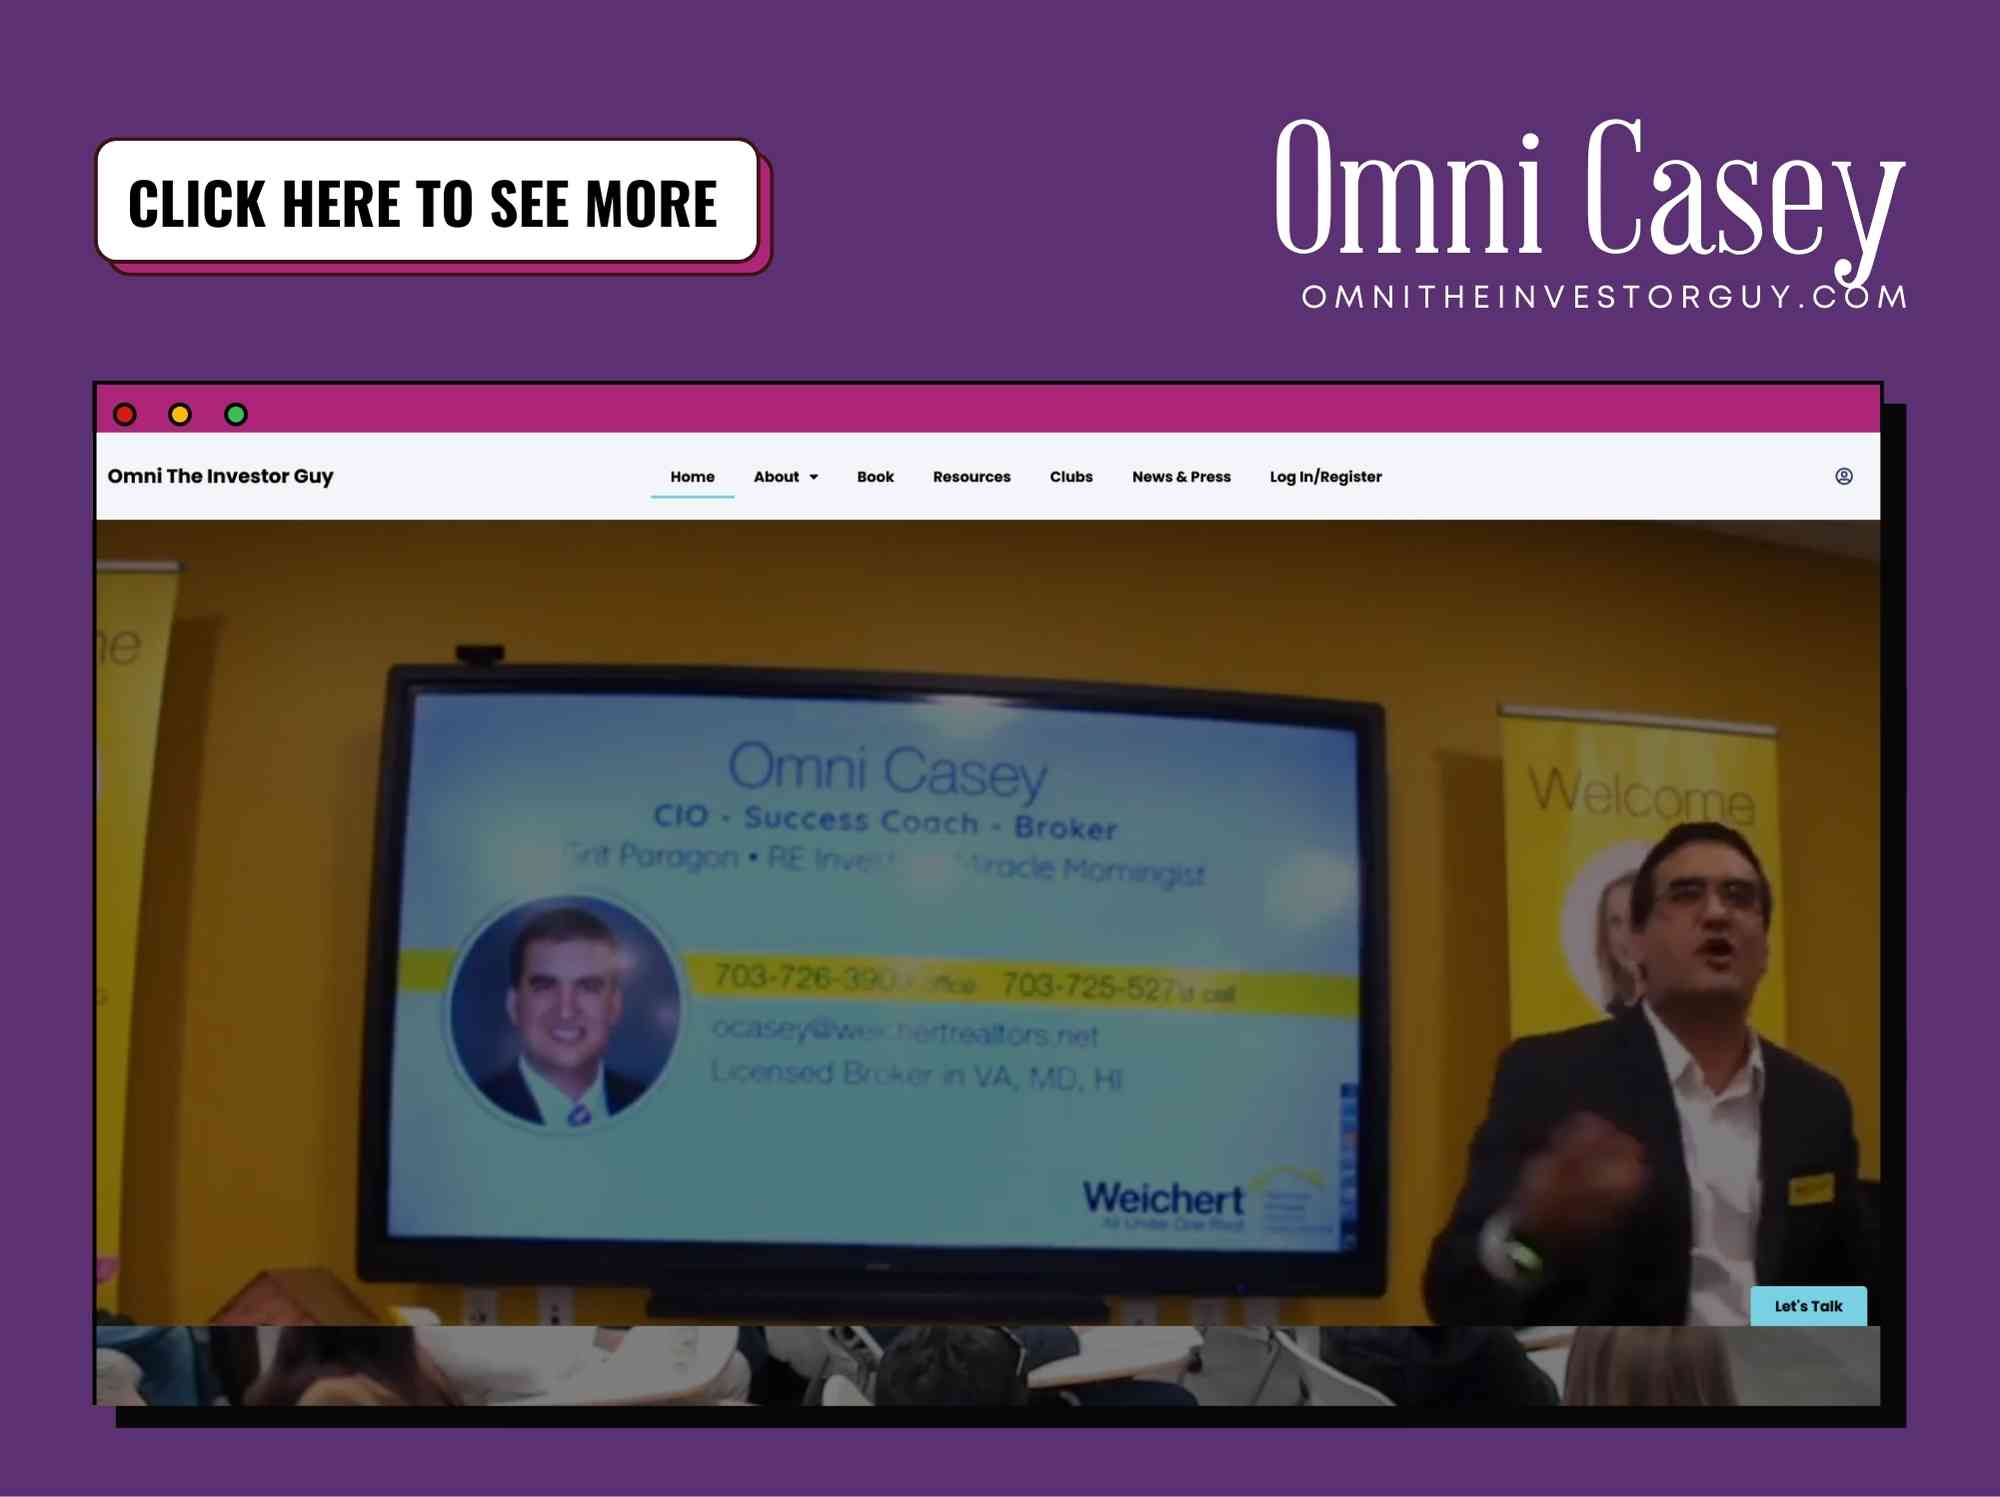 Omni Casey Website